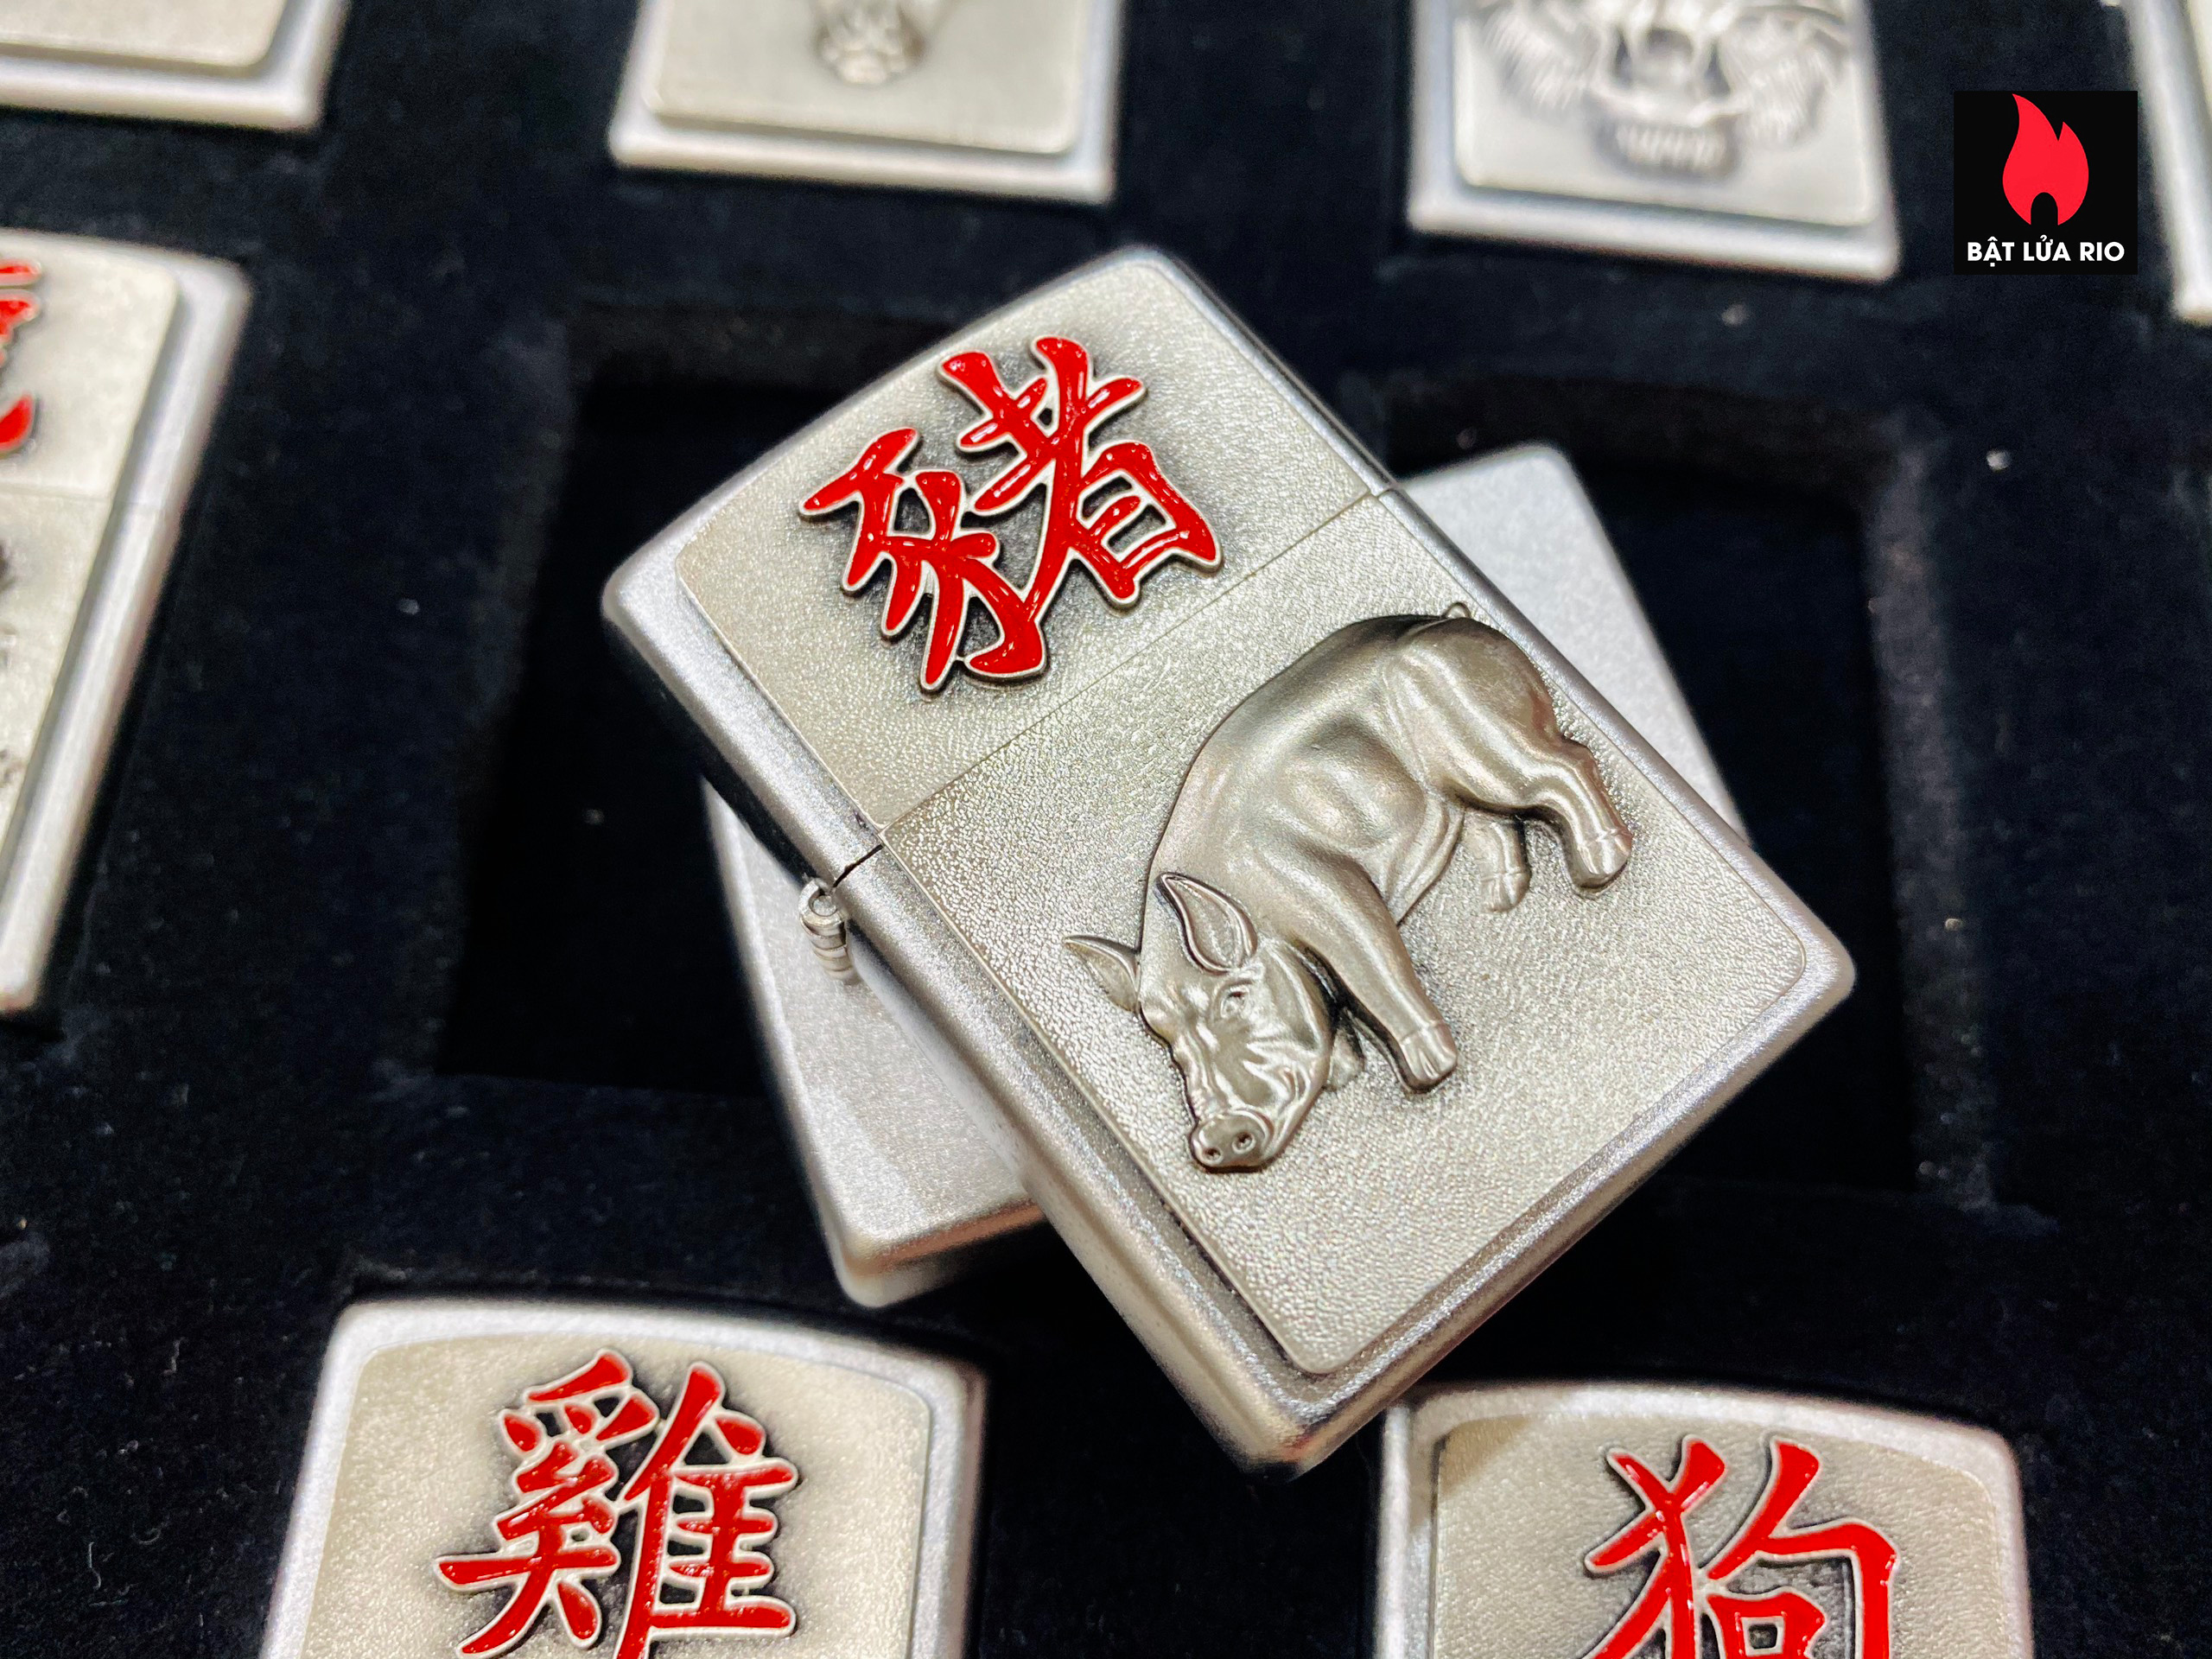 Zippo Set 2010-2011 – Zippo Lighter Collection Chinese Zodiac Set – 12 Con Giáp Châu Á 19